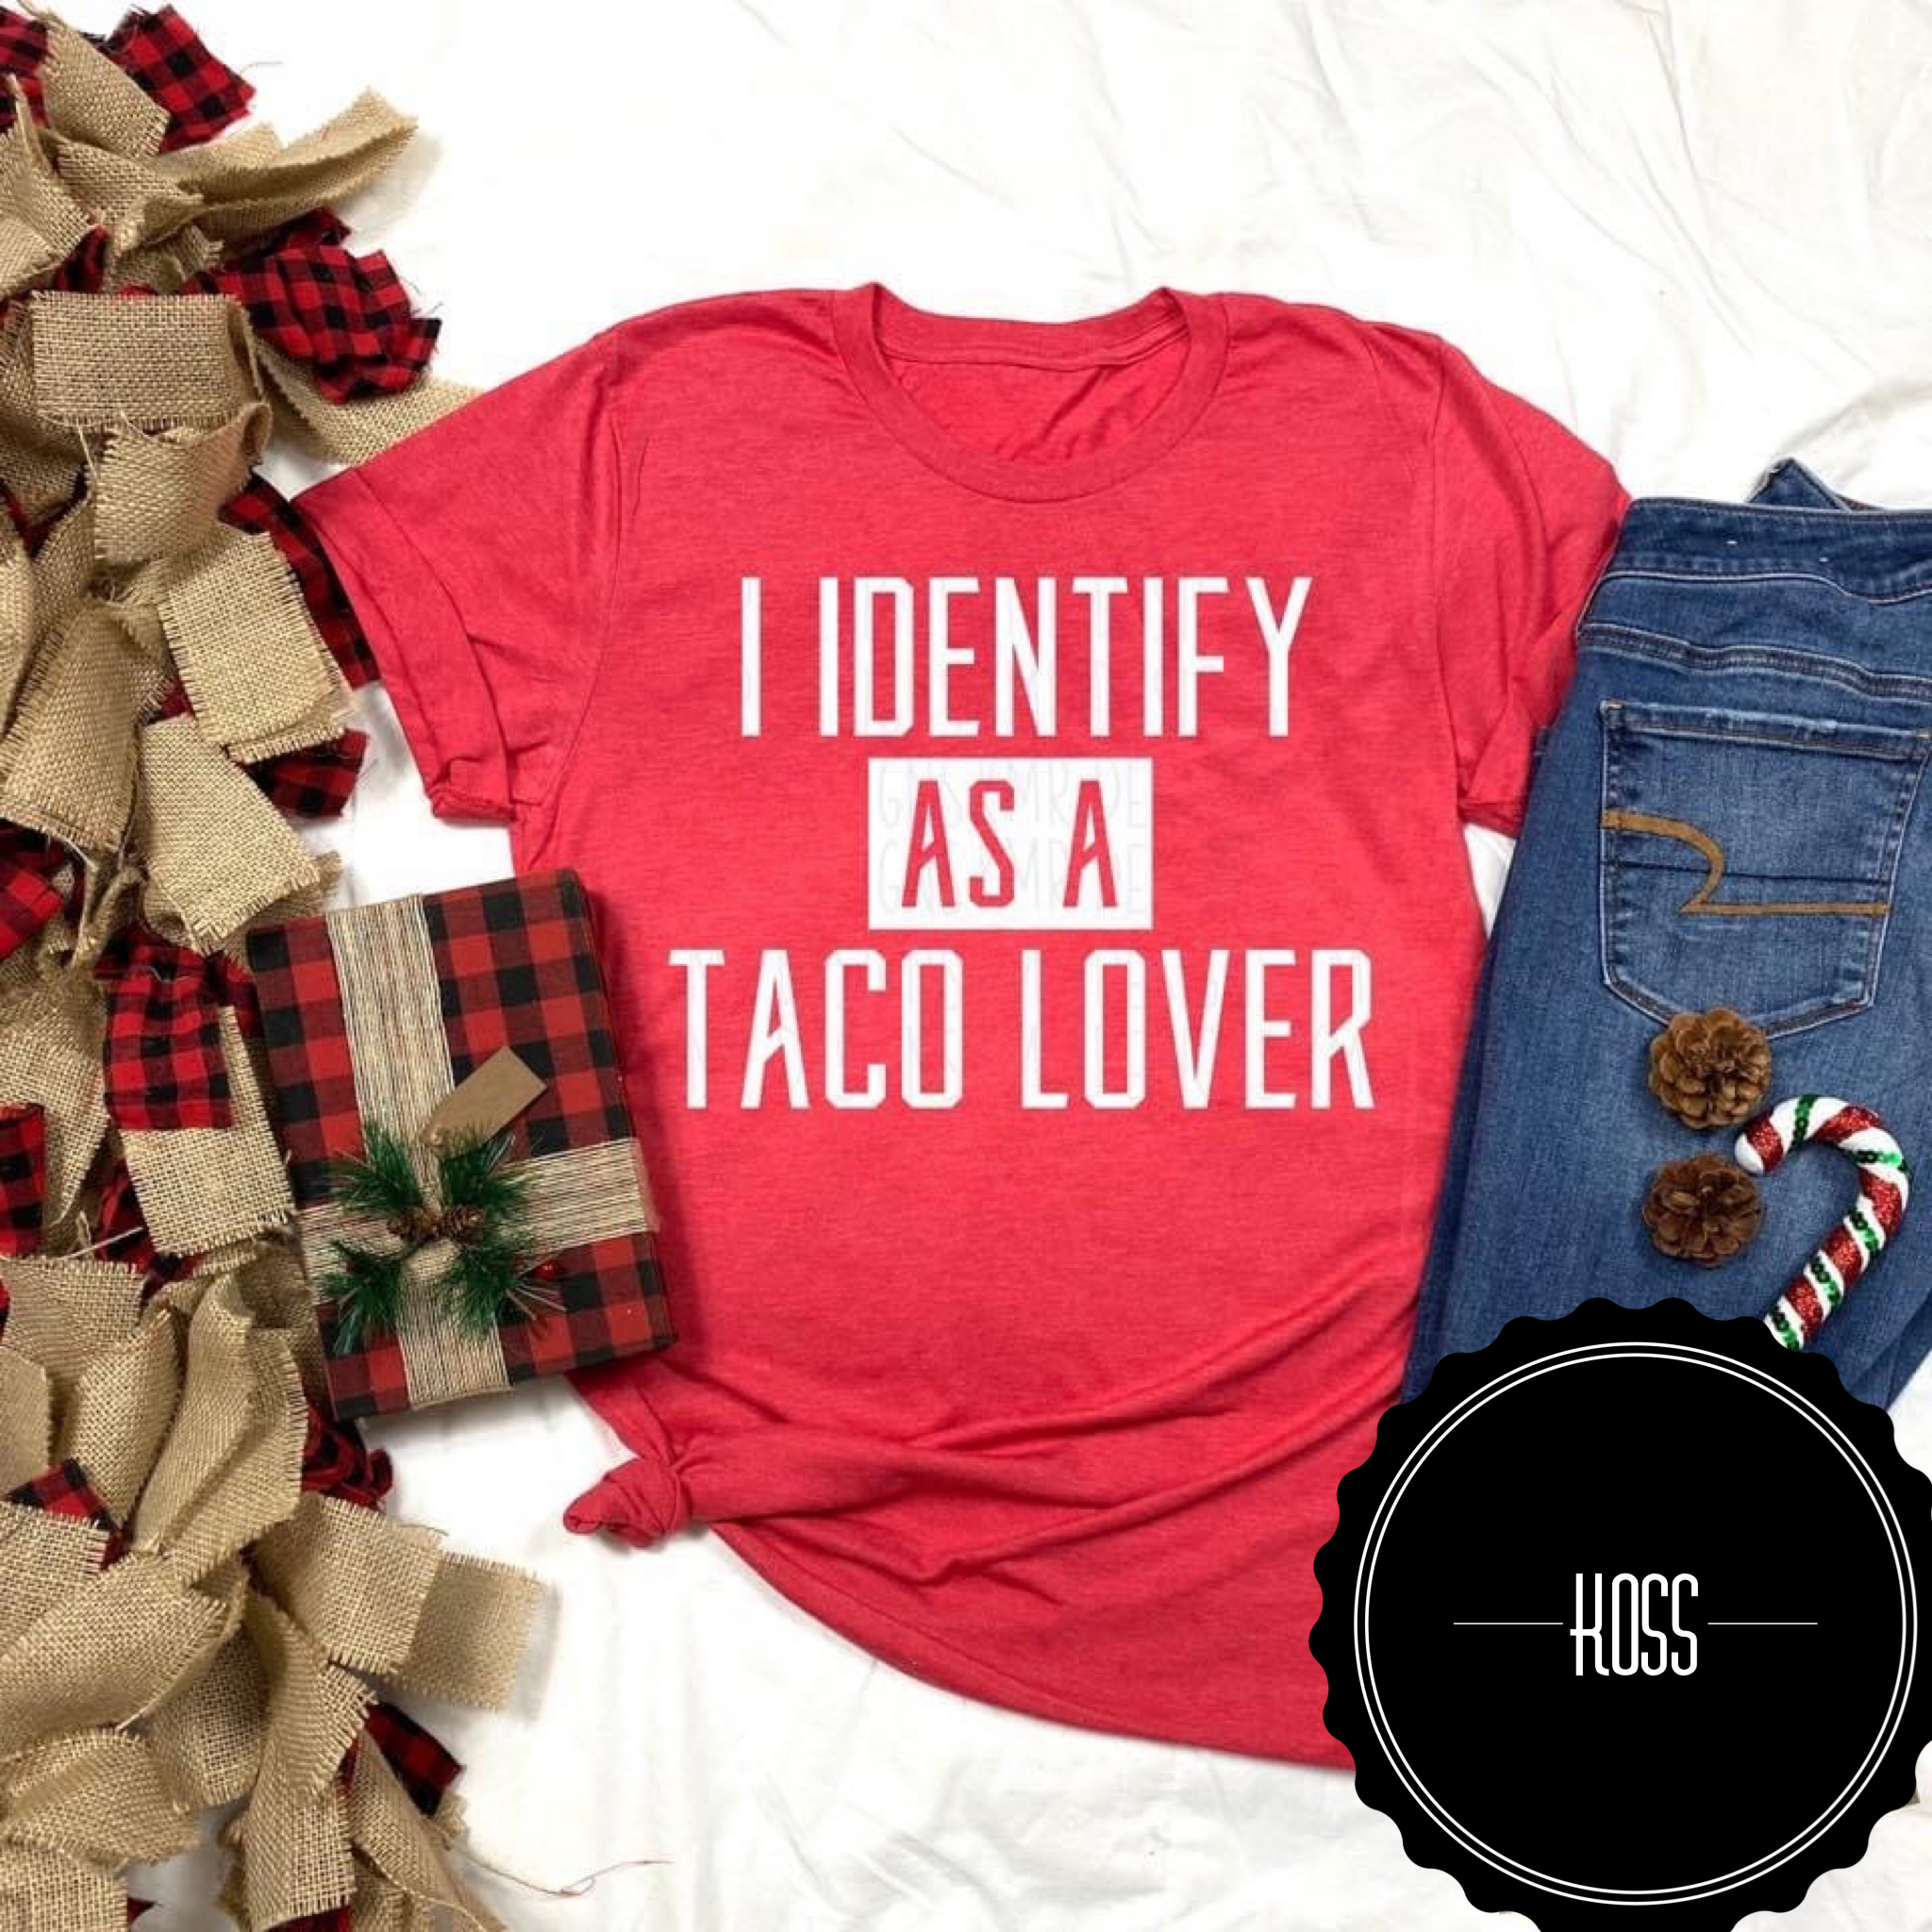 I identify as a taco lover